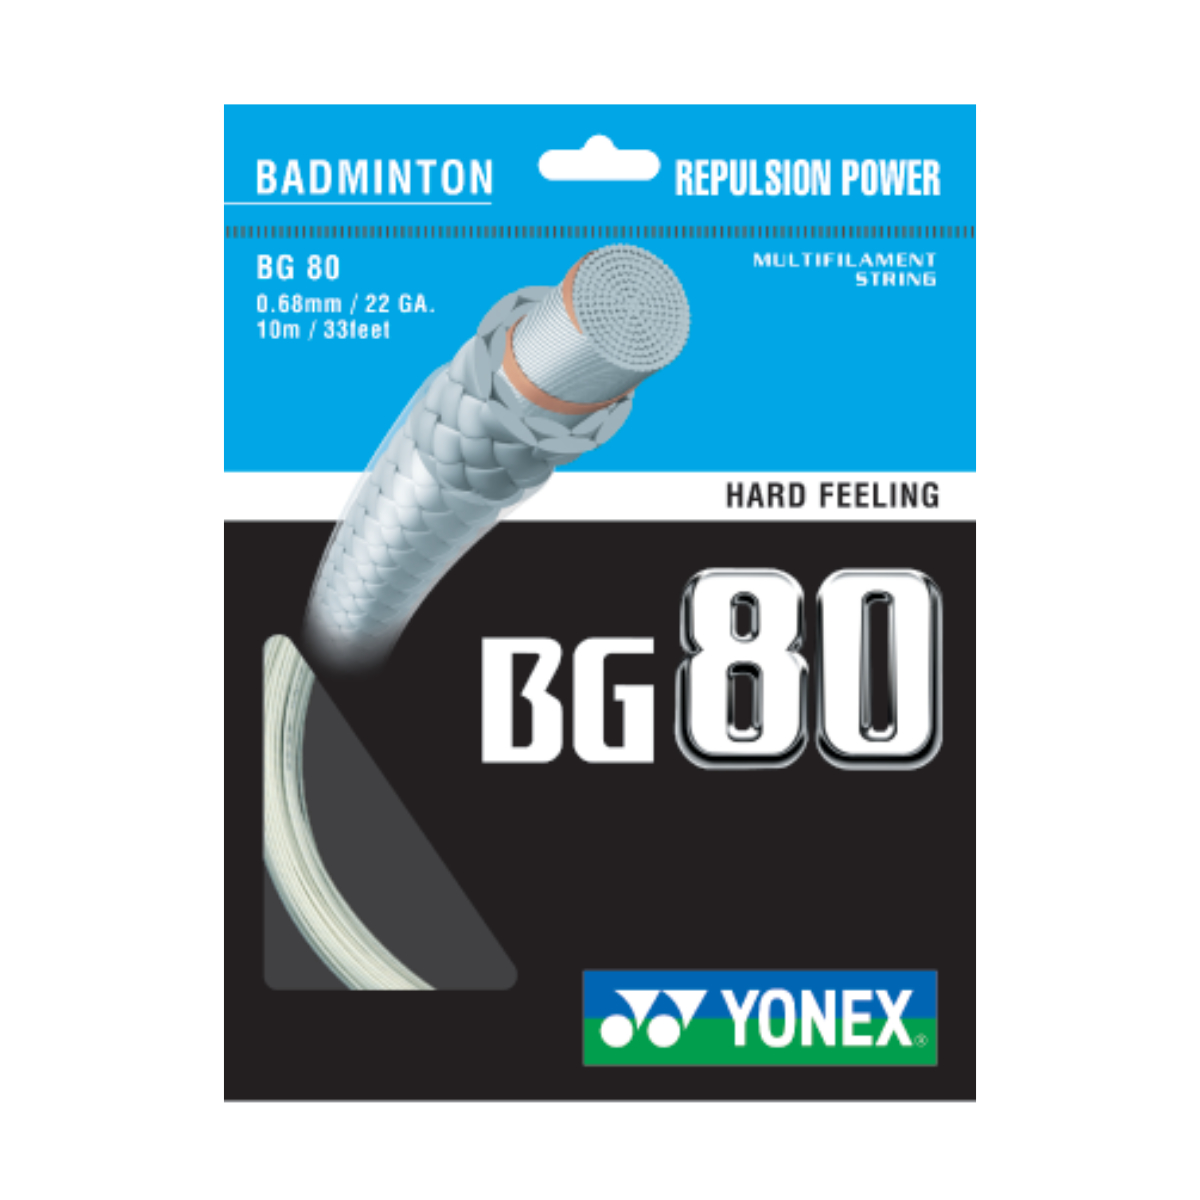 YONEX Badminton Saite - BG-80 SETDetailbild - 1